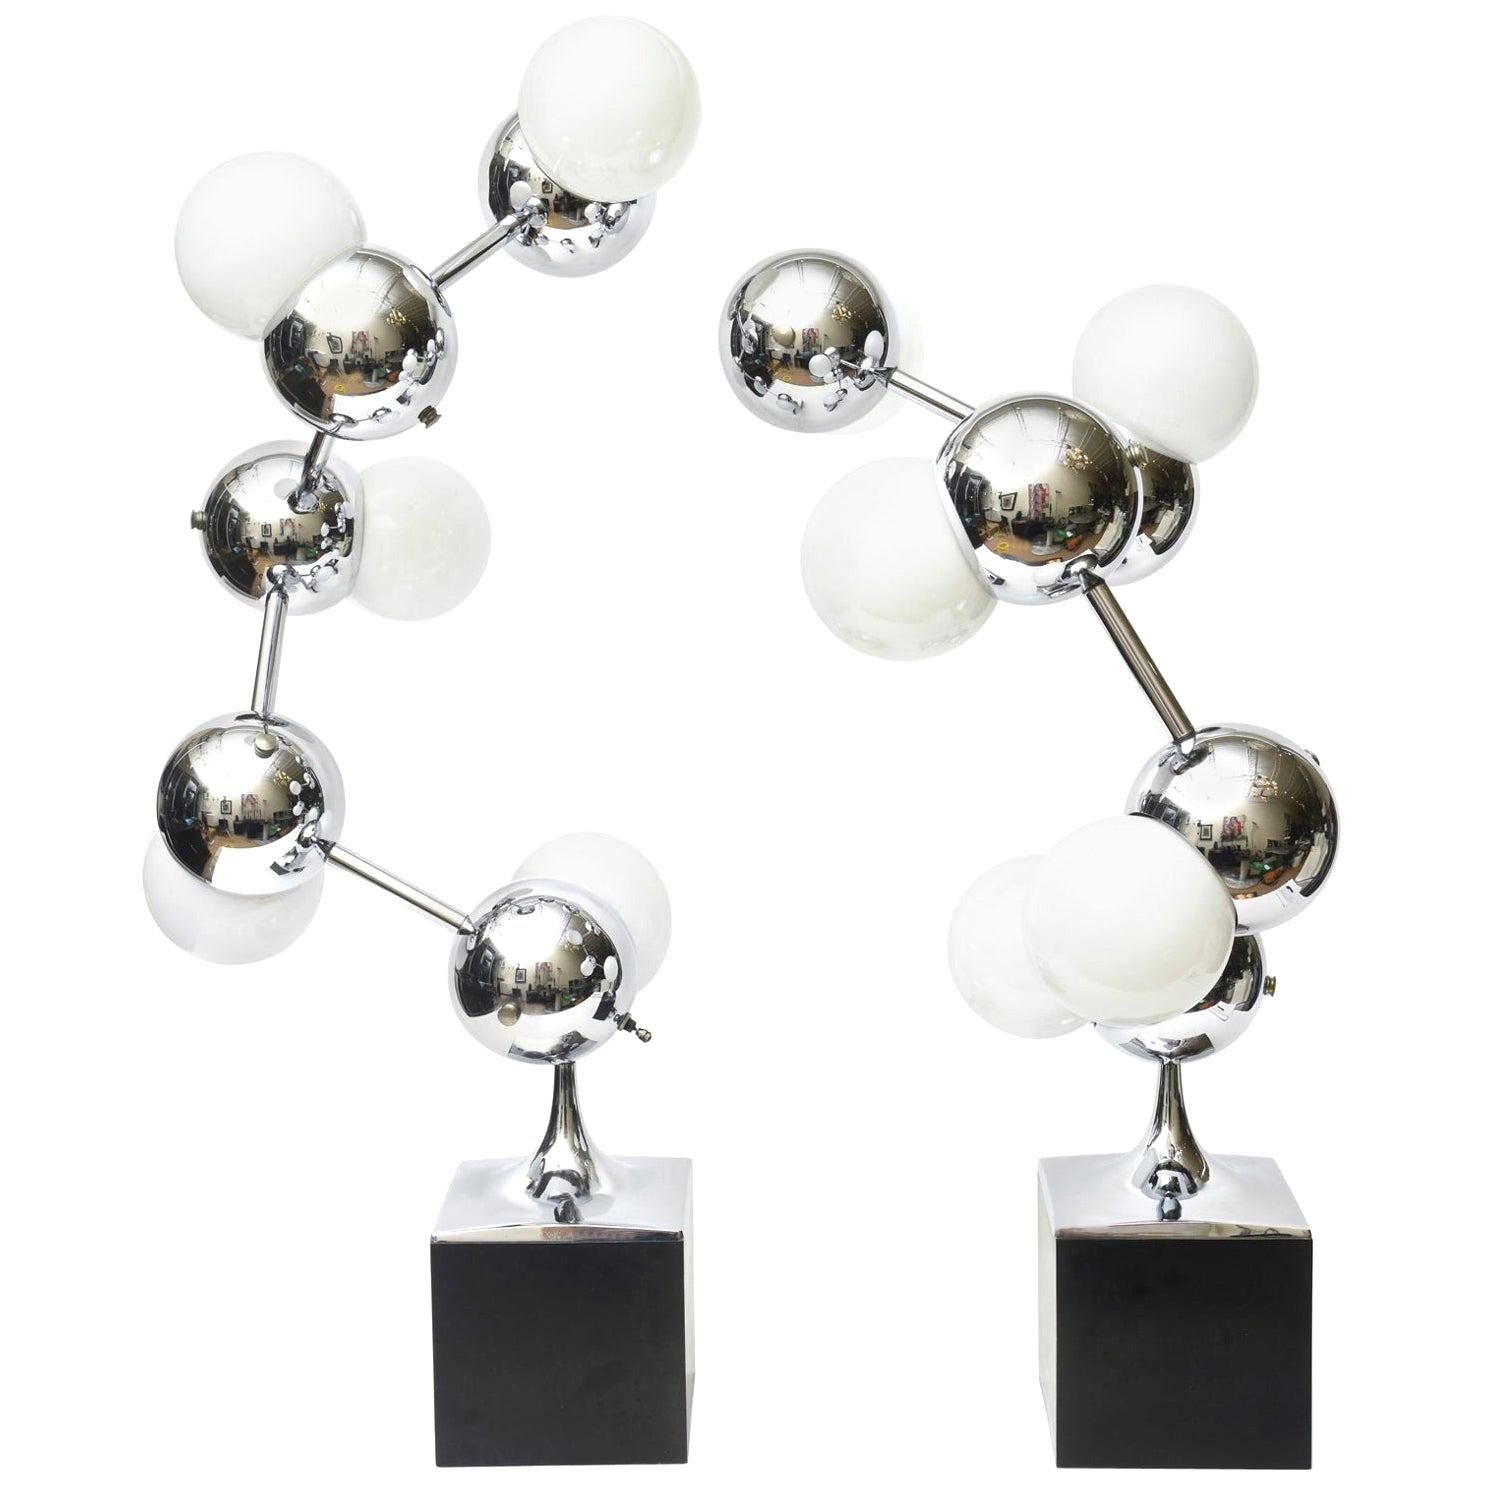 Robert Sonneman Atomic Molecule Sculptural Lamps Mid-Century Modern